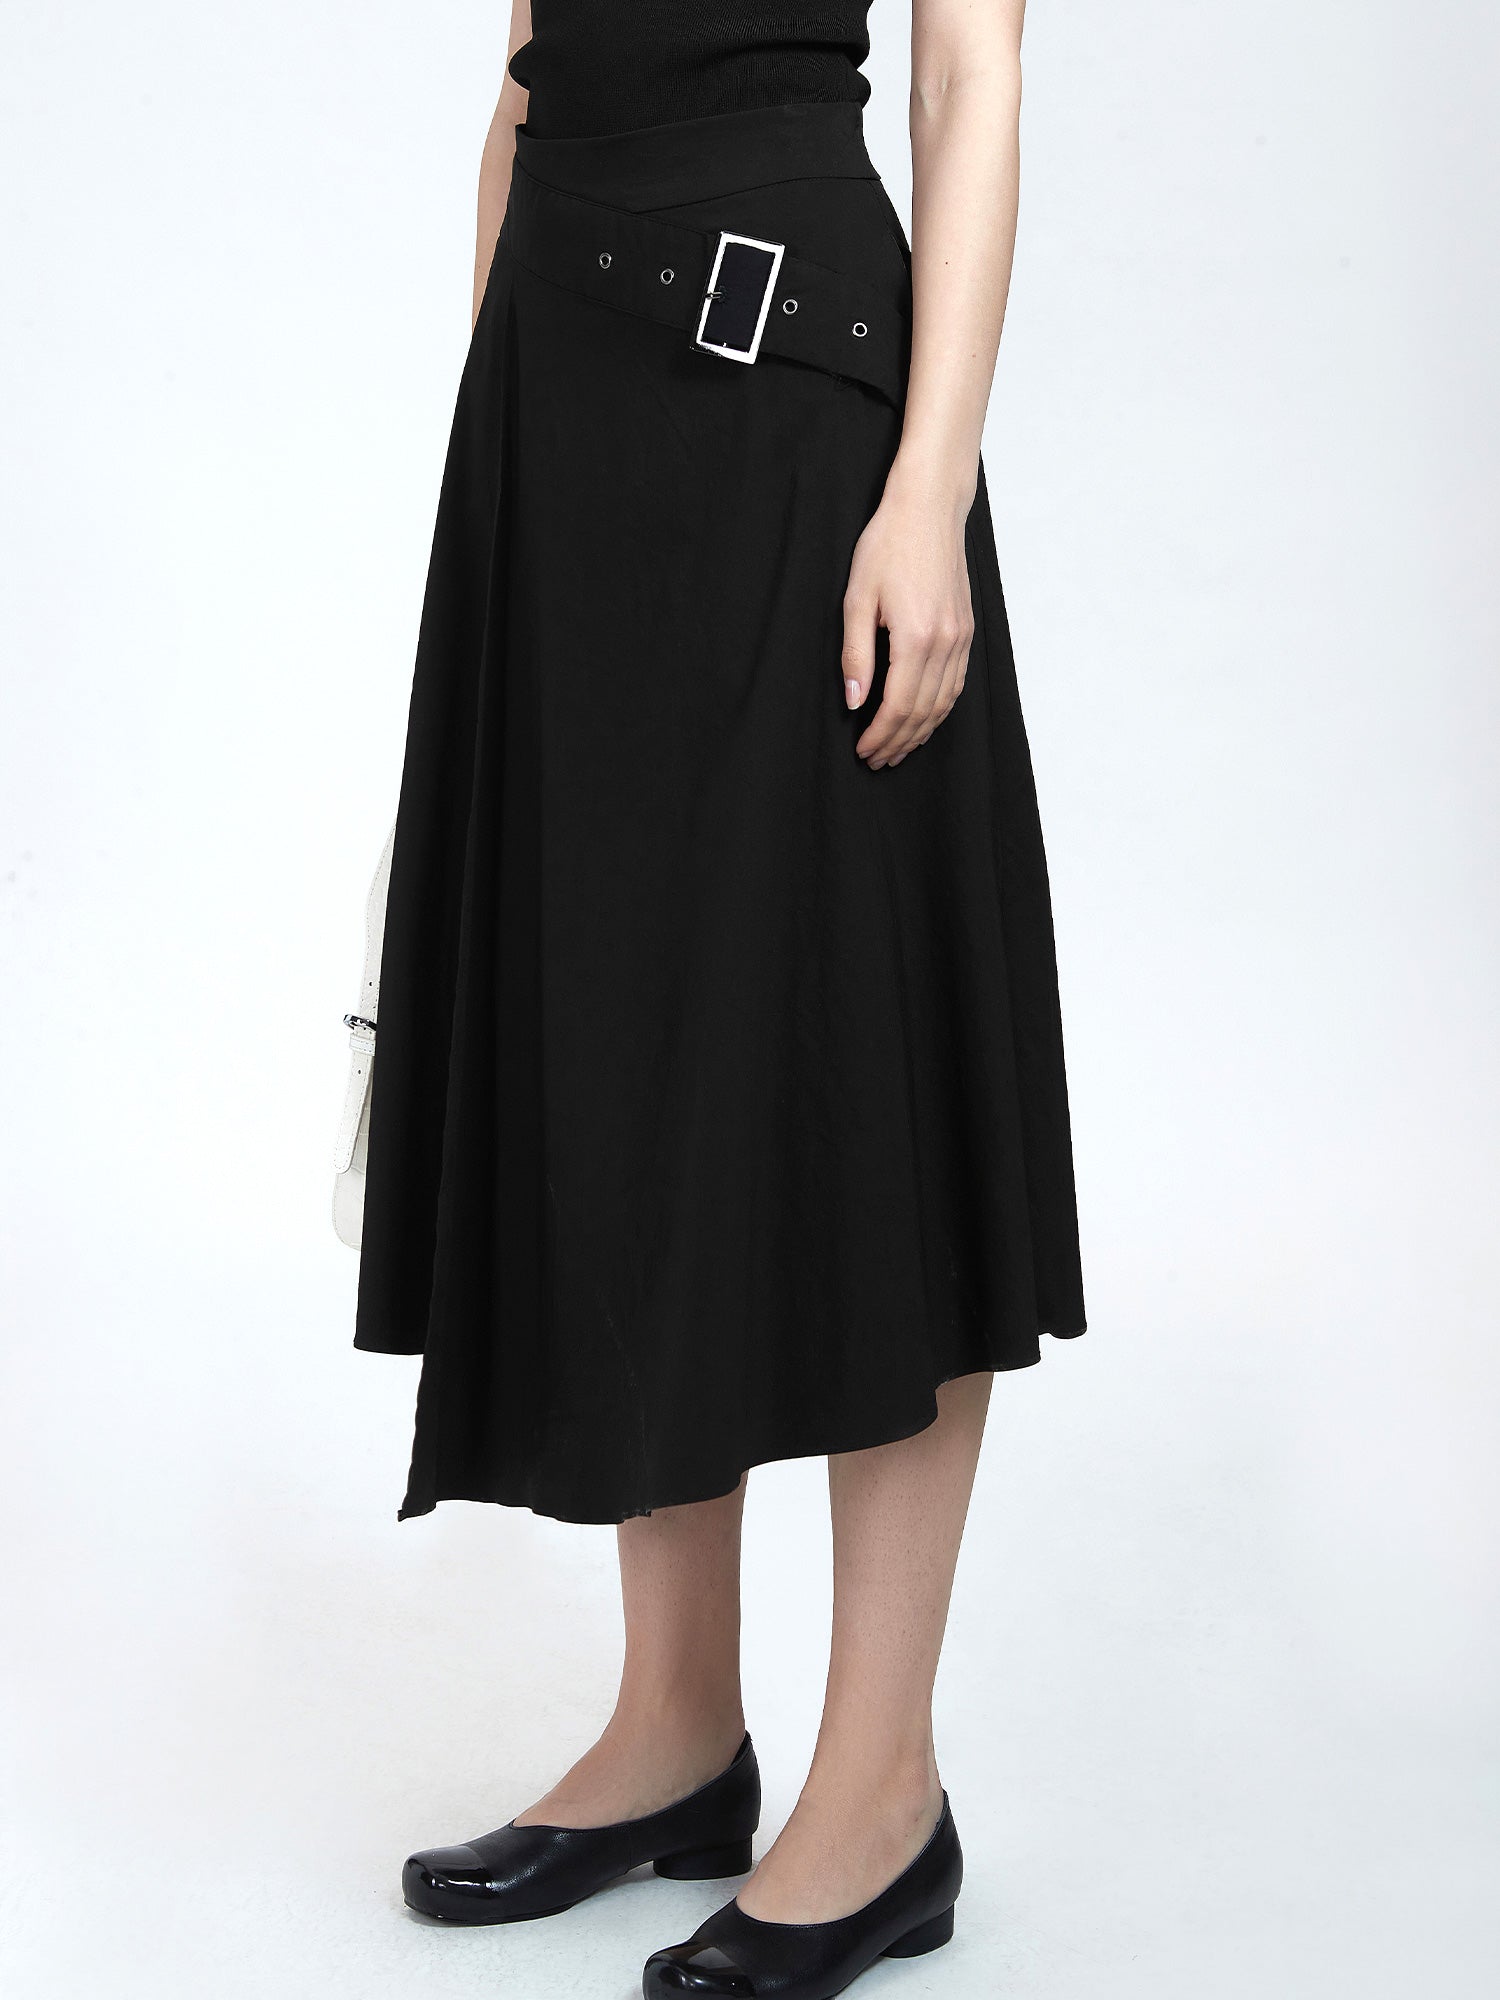 Unique dressing inspiration for an irregular A-line skirt